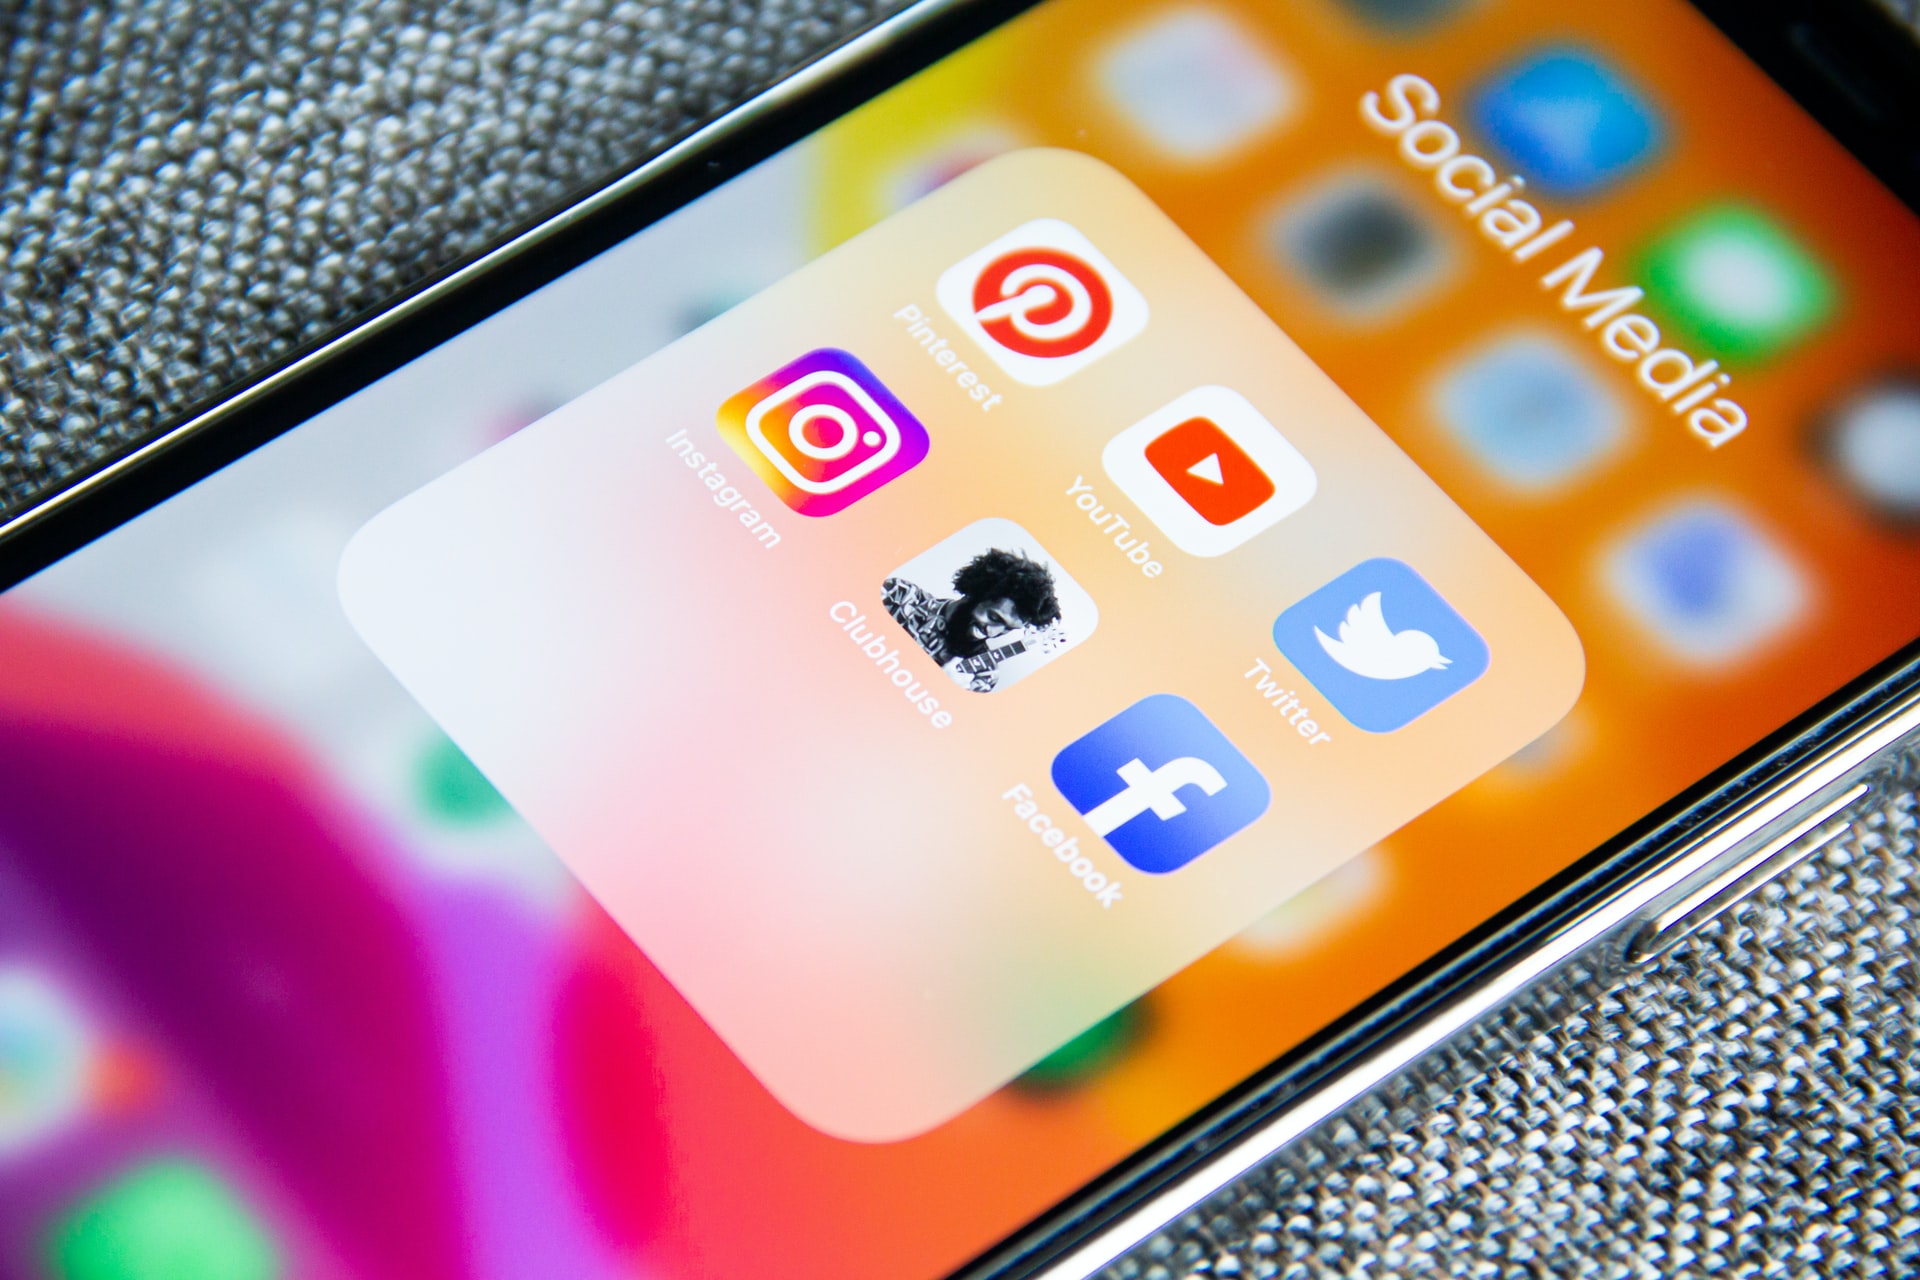 Spocial media apps on a smartphone